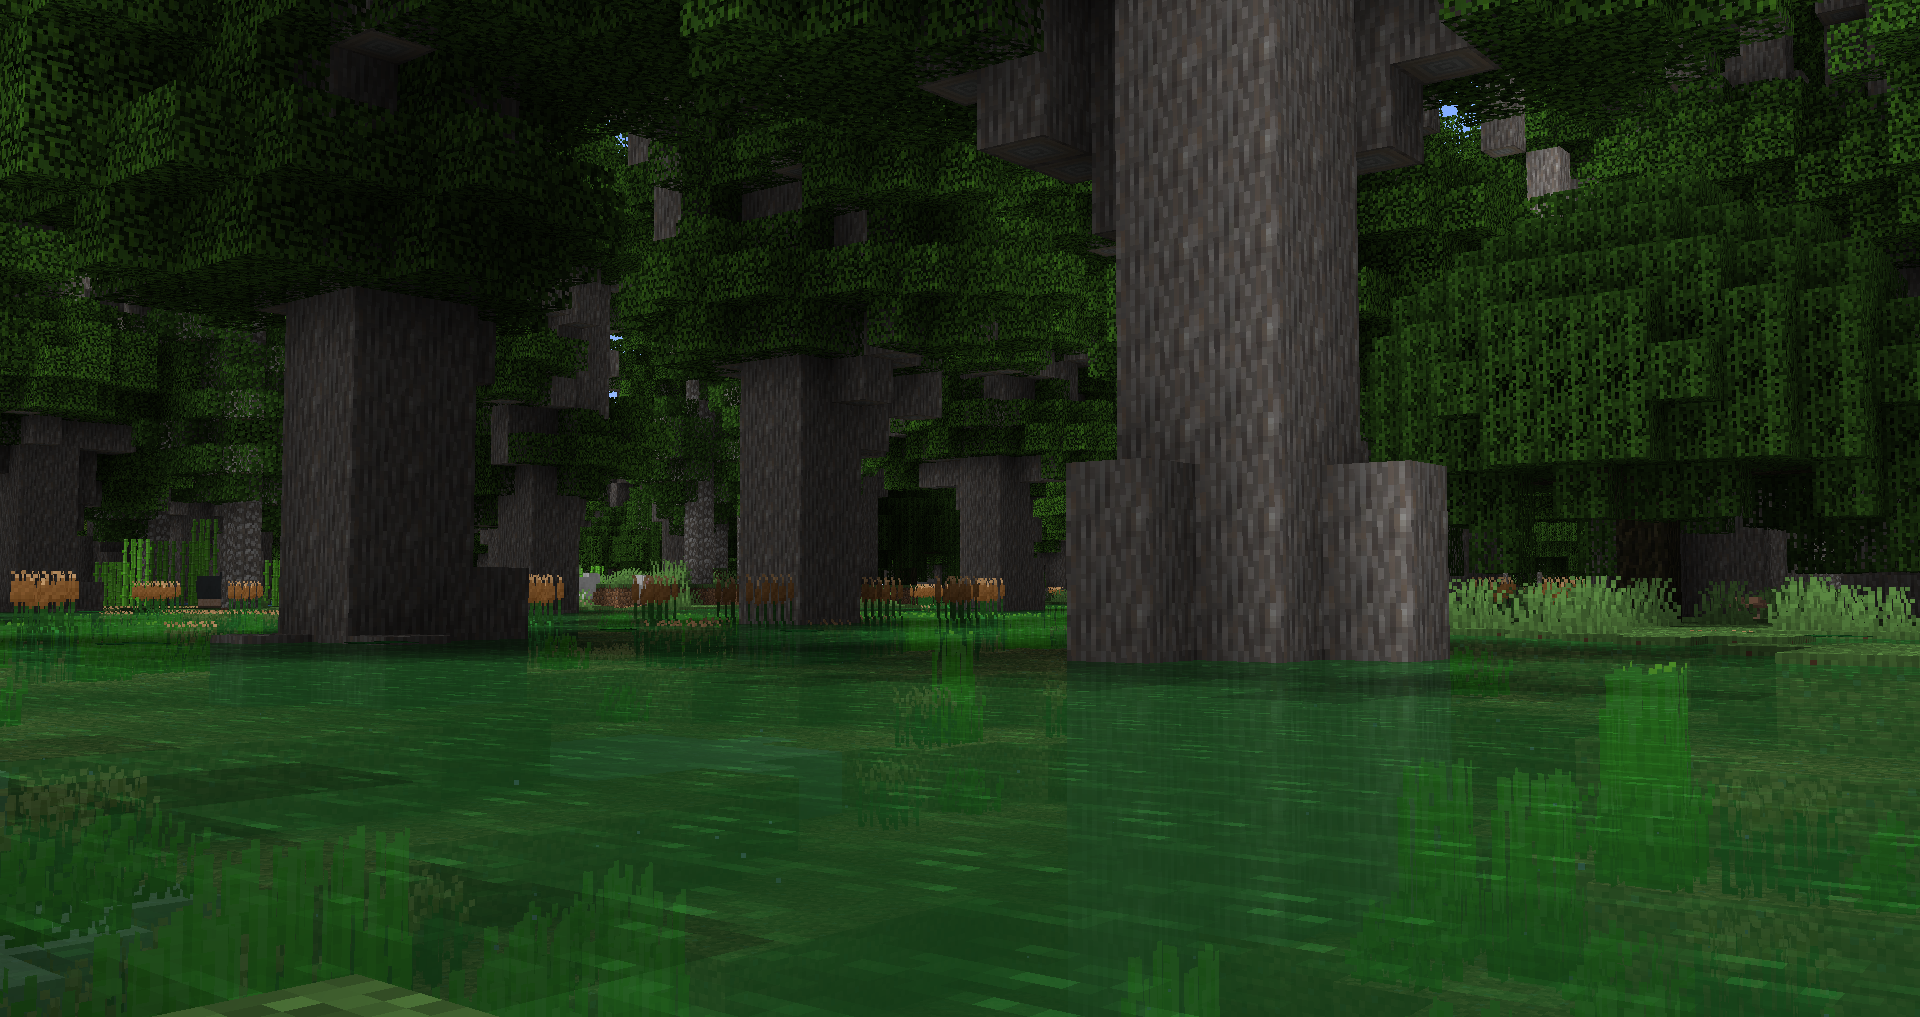 Cypress Swamp Image